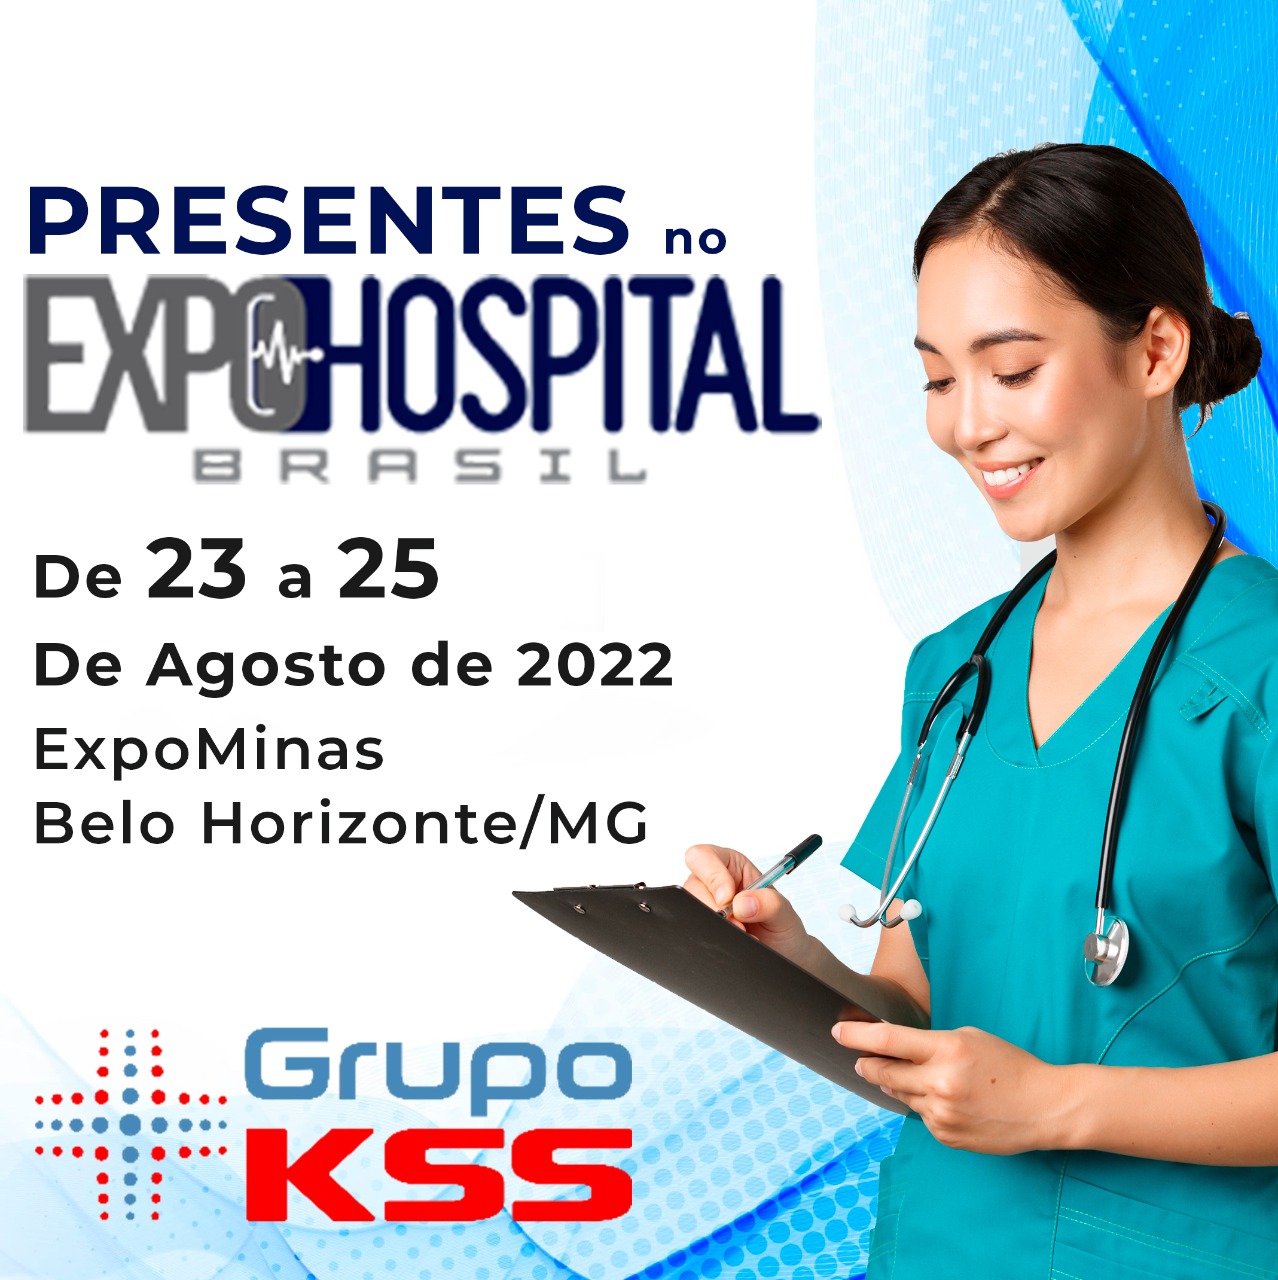 EXPO HOSTIPAL BRASIL 2022.